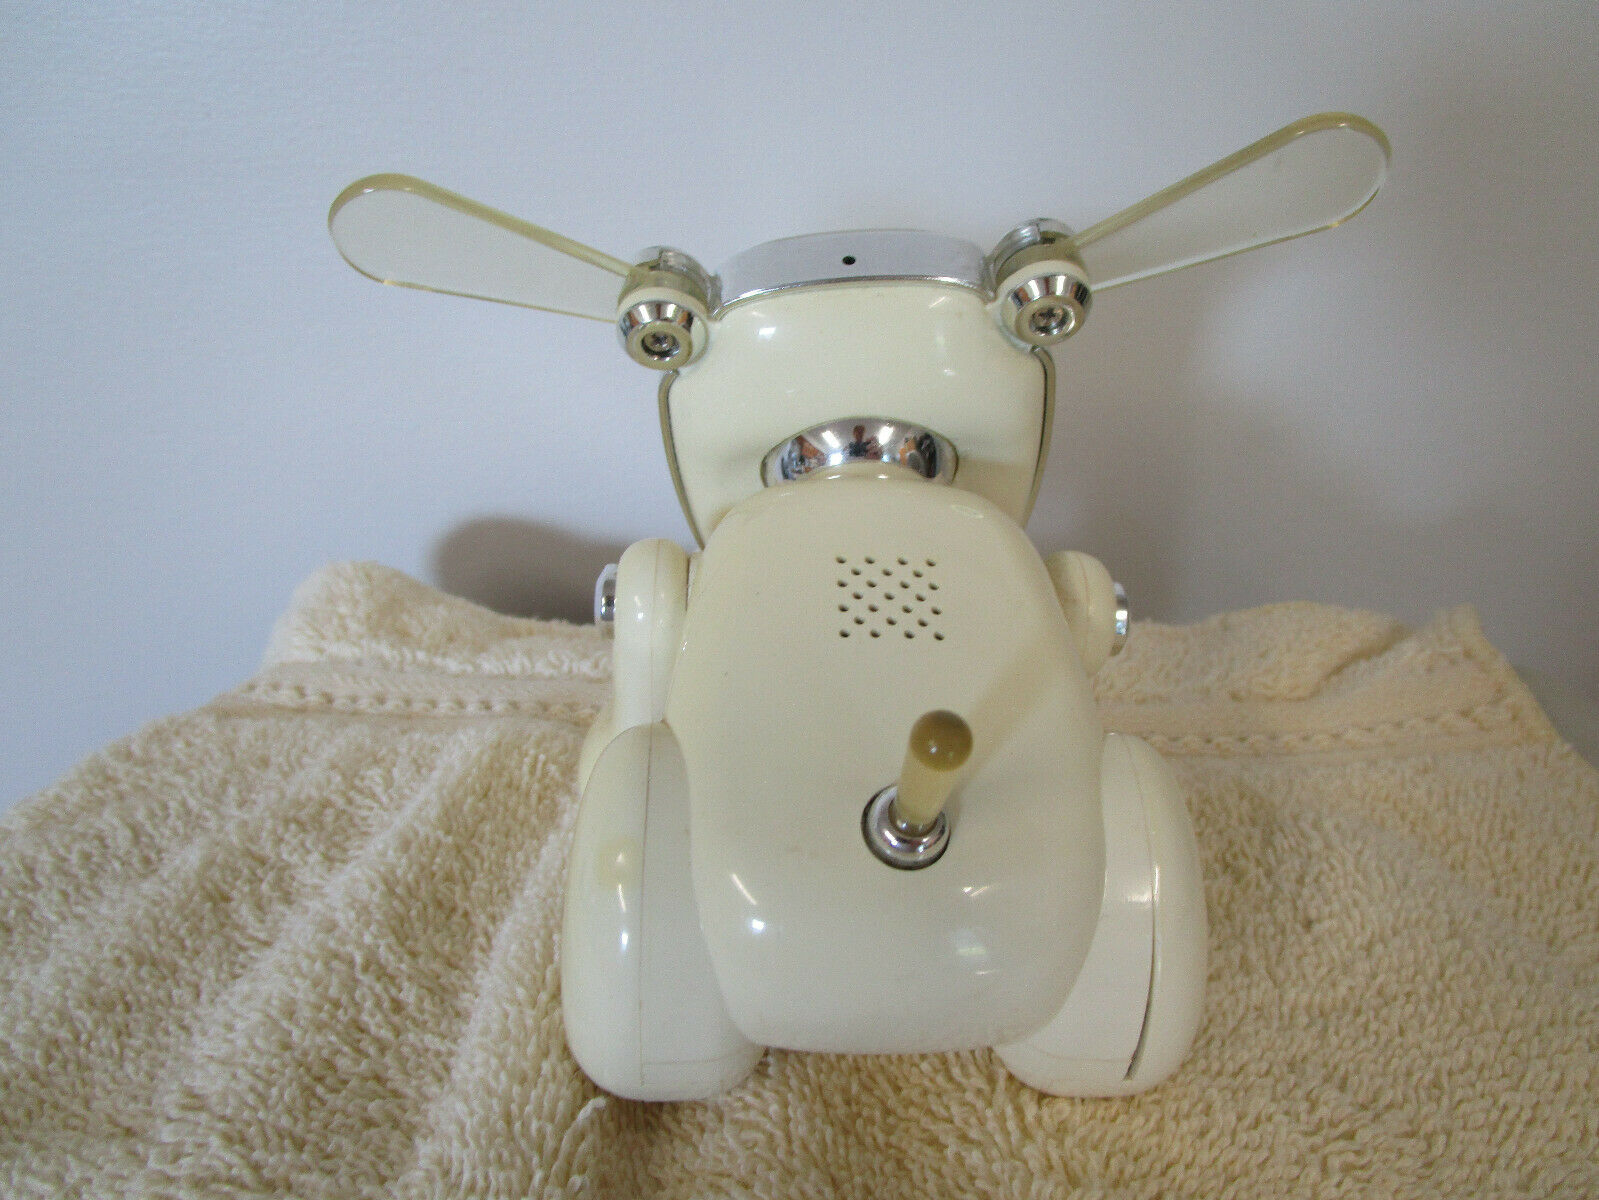 Hasbro Sega Idog Robot Dog Toy White 2005 C-015c